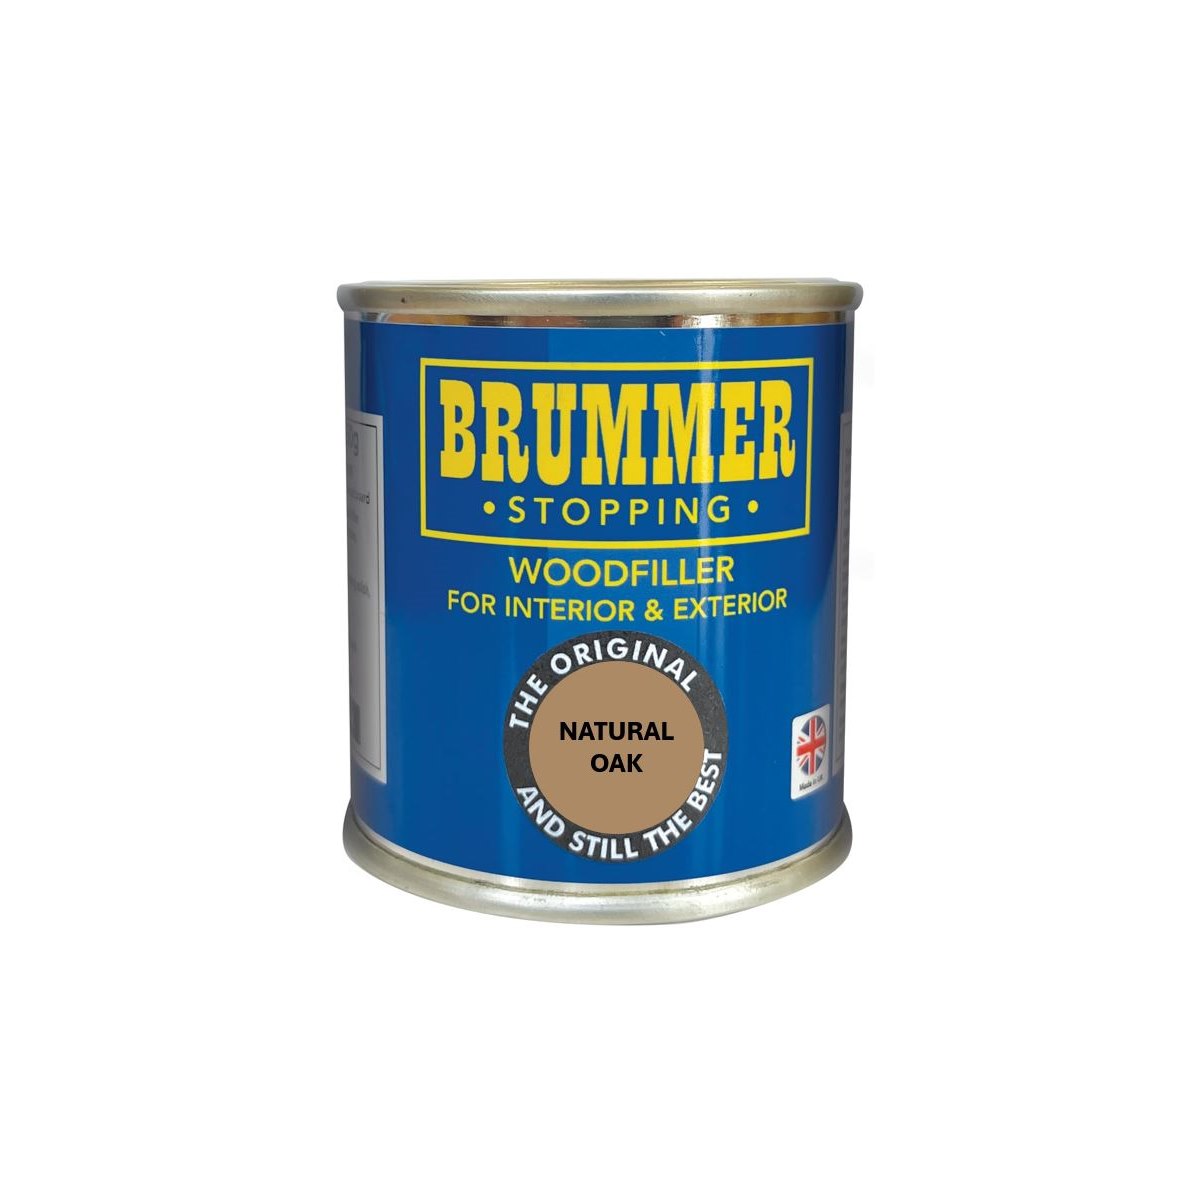 Brummer Woodfiller for Interior and Exteior Use Natural Oak 700g